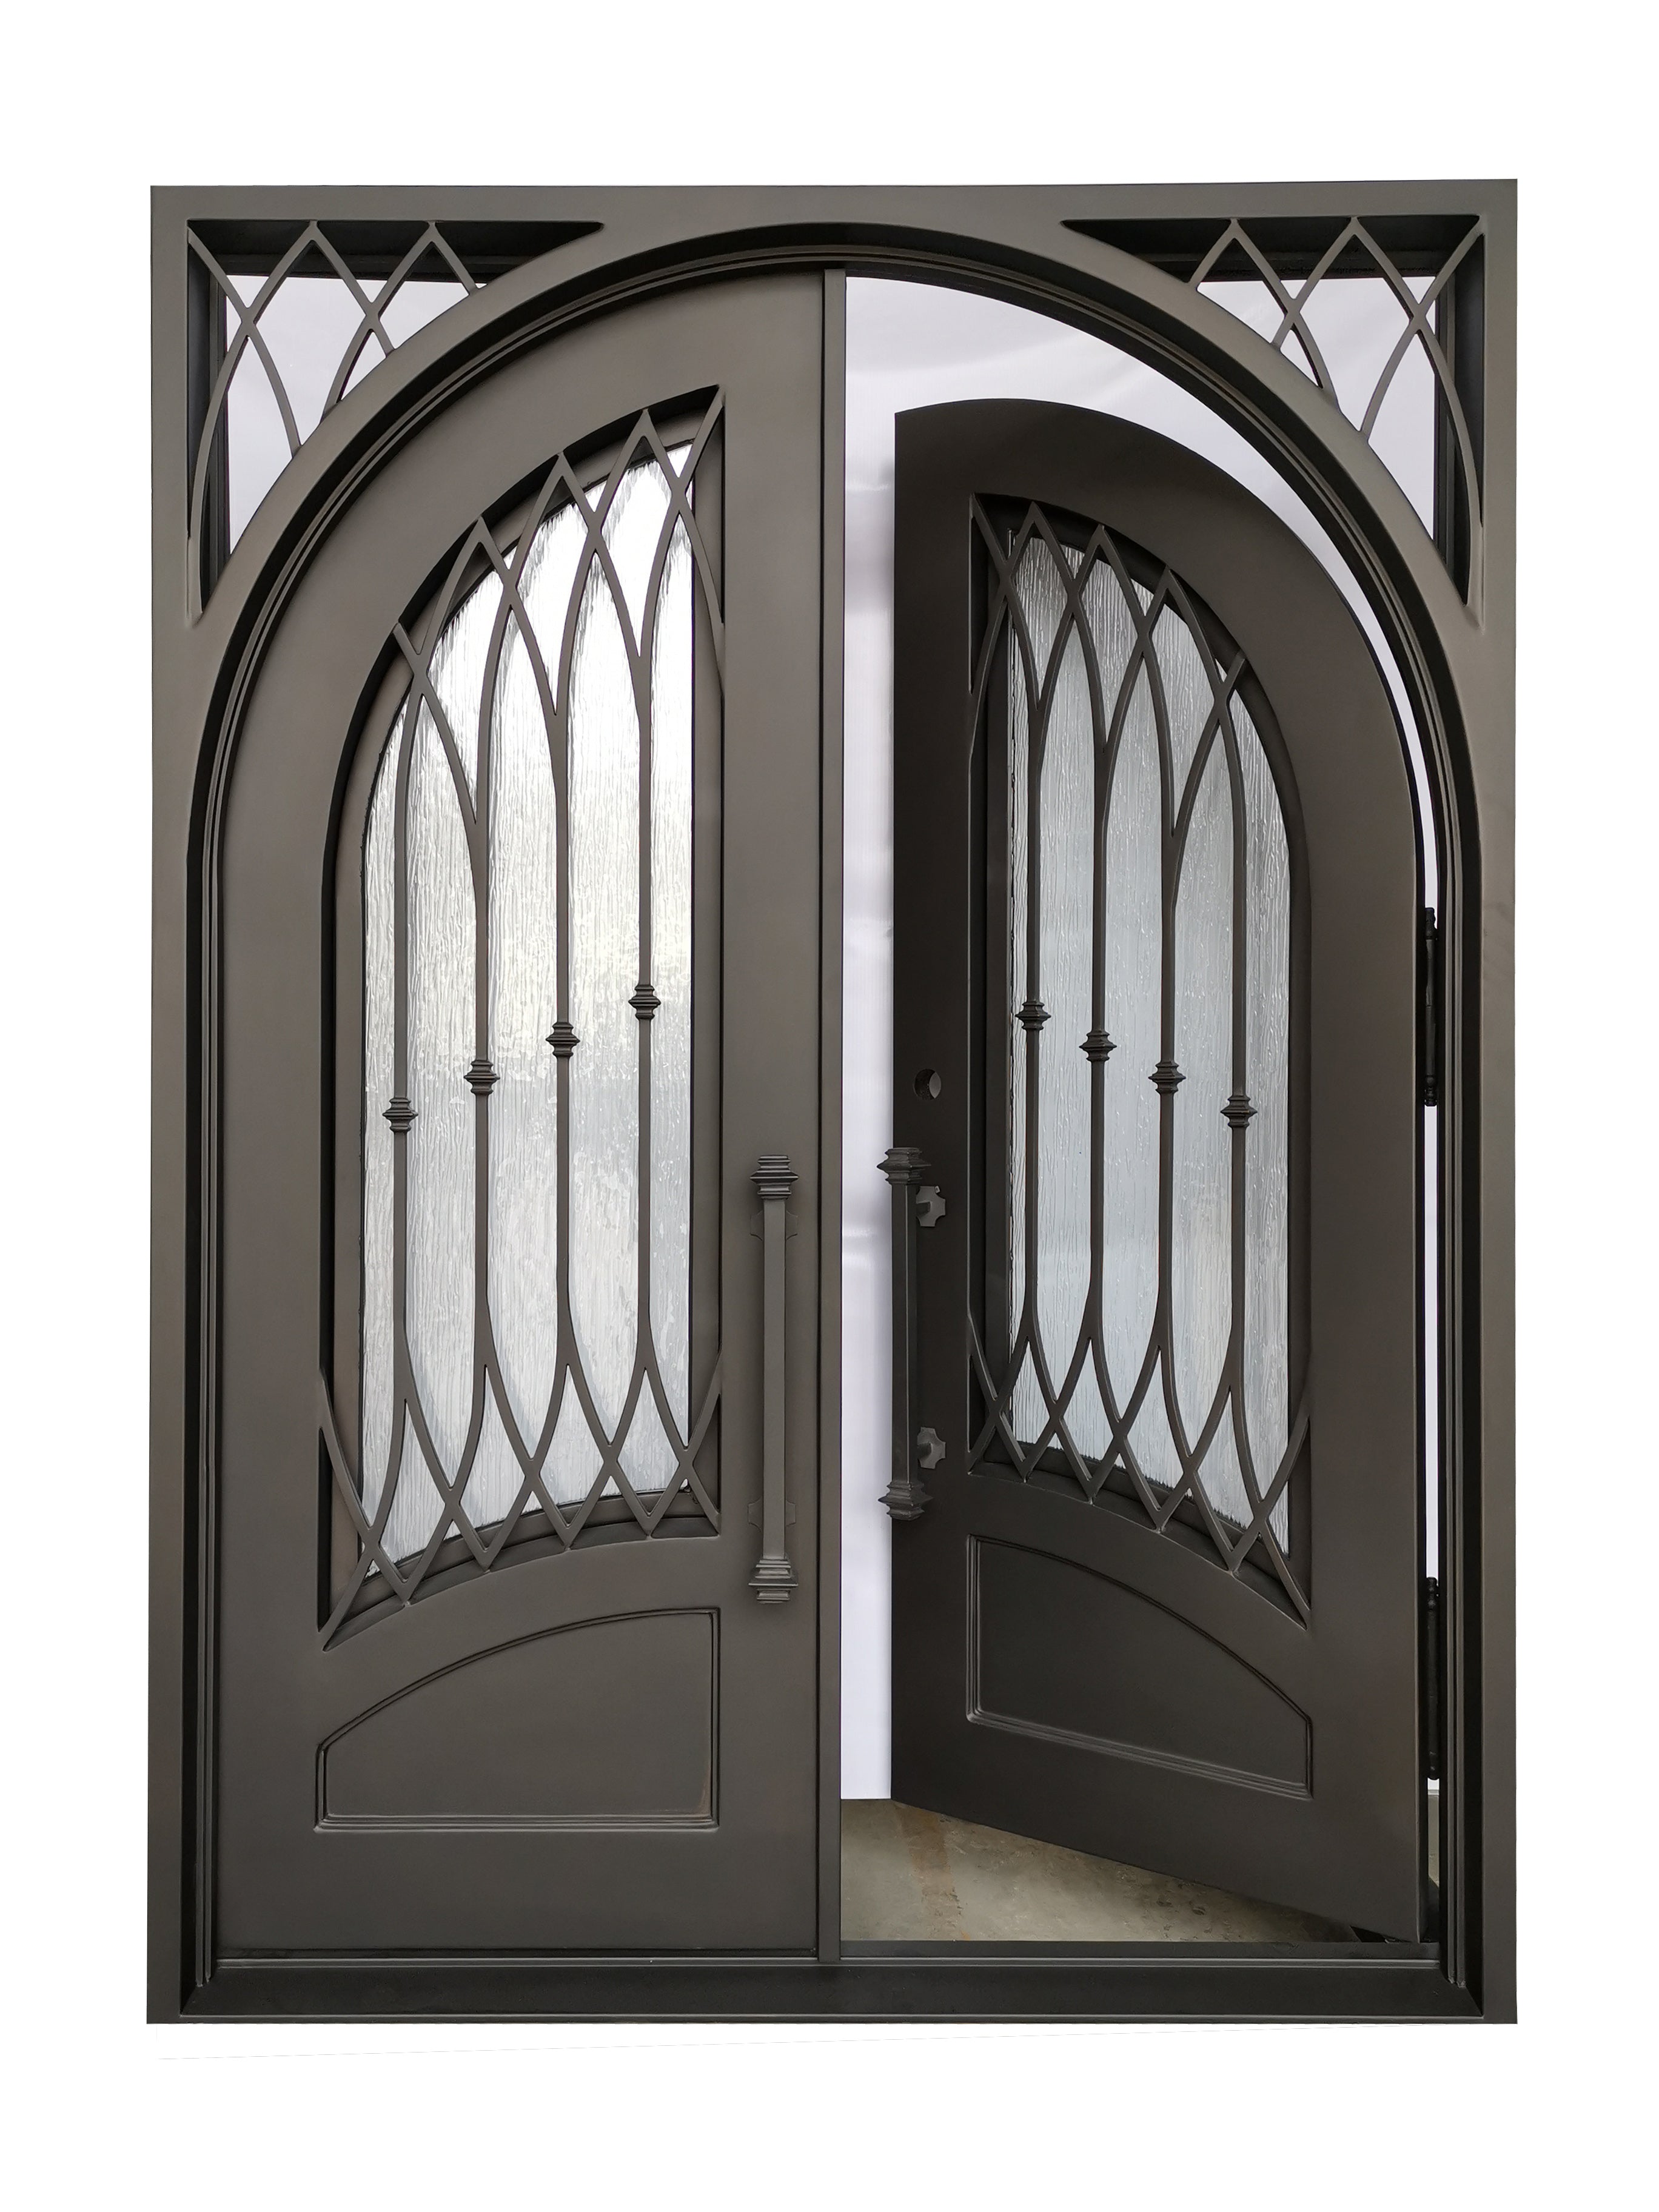 Austin Model Double Front Entry Iron Door With Tempered Rain Glass Dark Bronze Finish - AAWAIZ IMPORTS